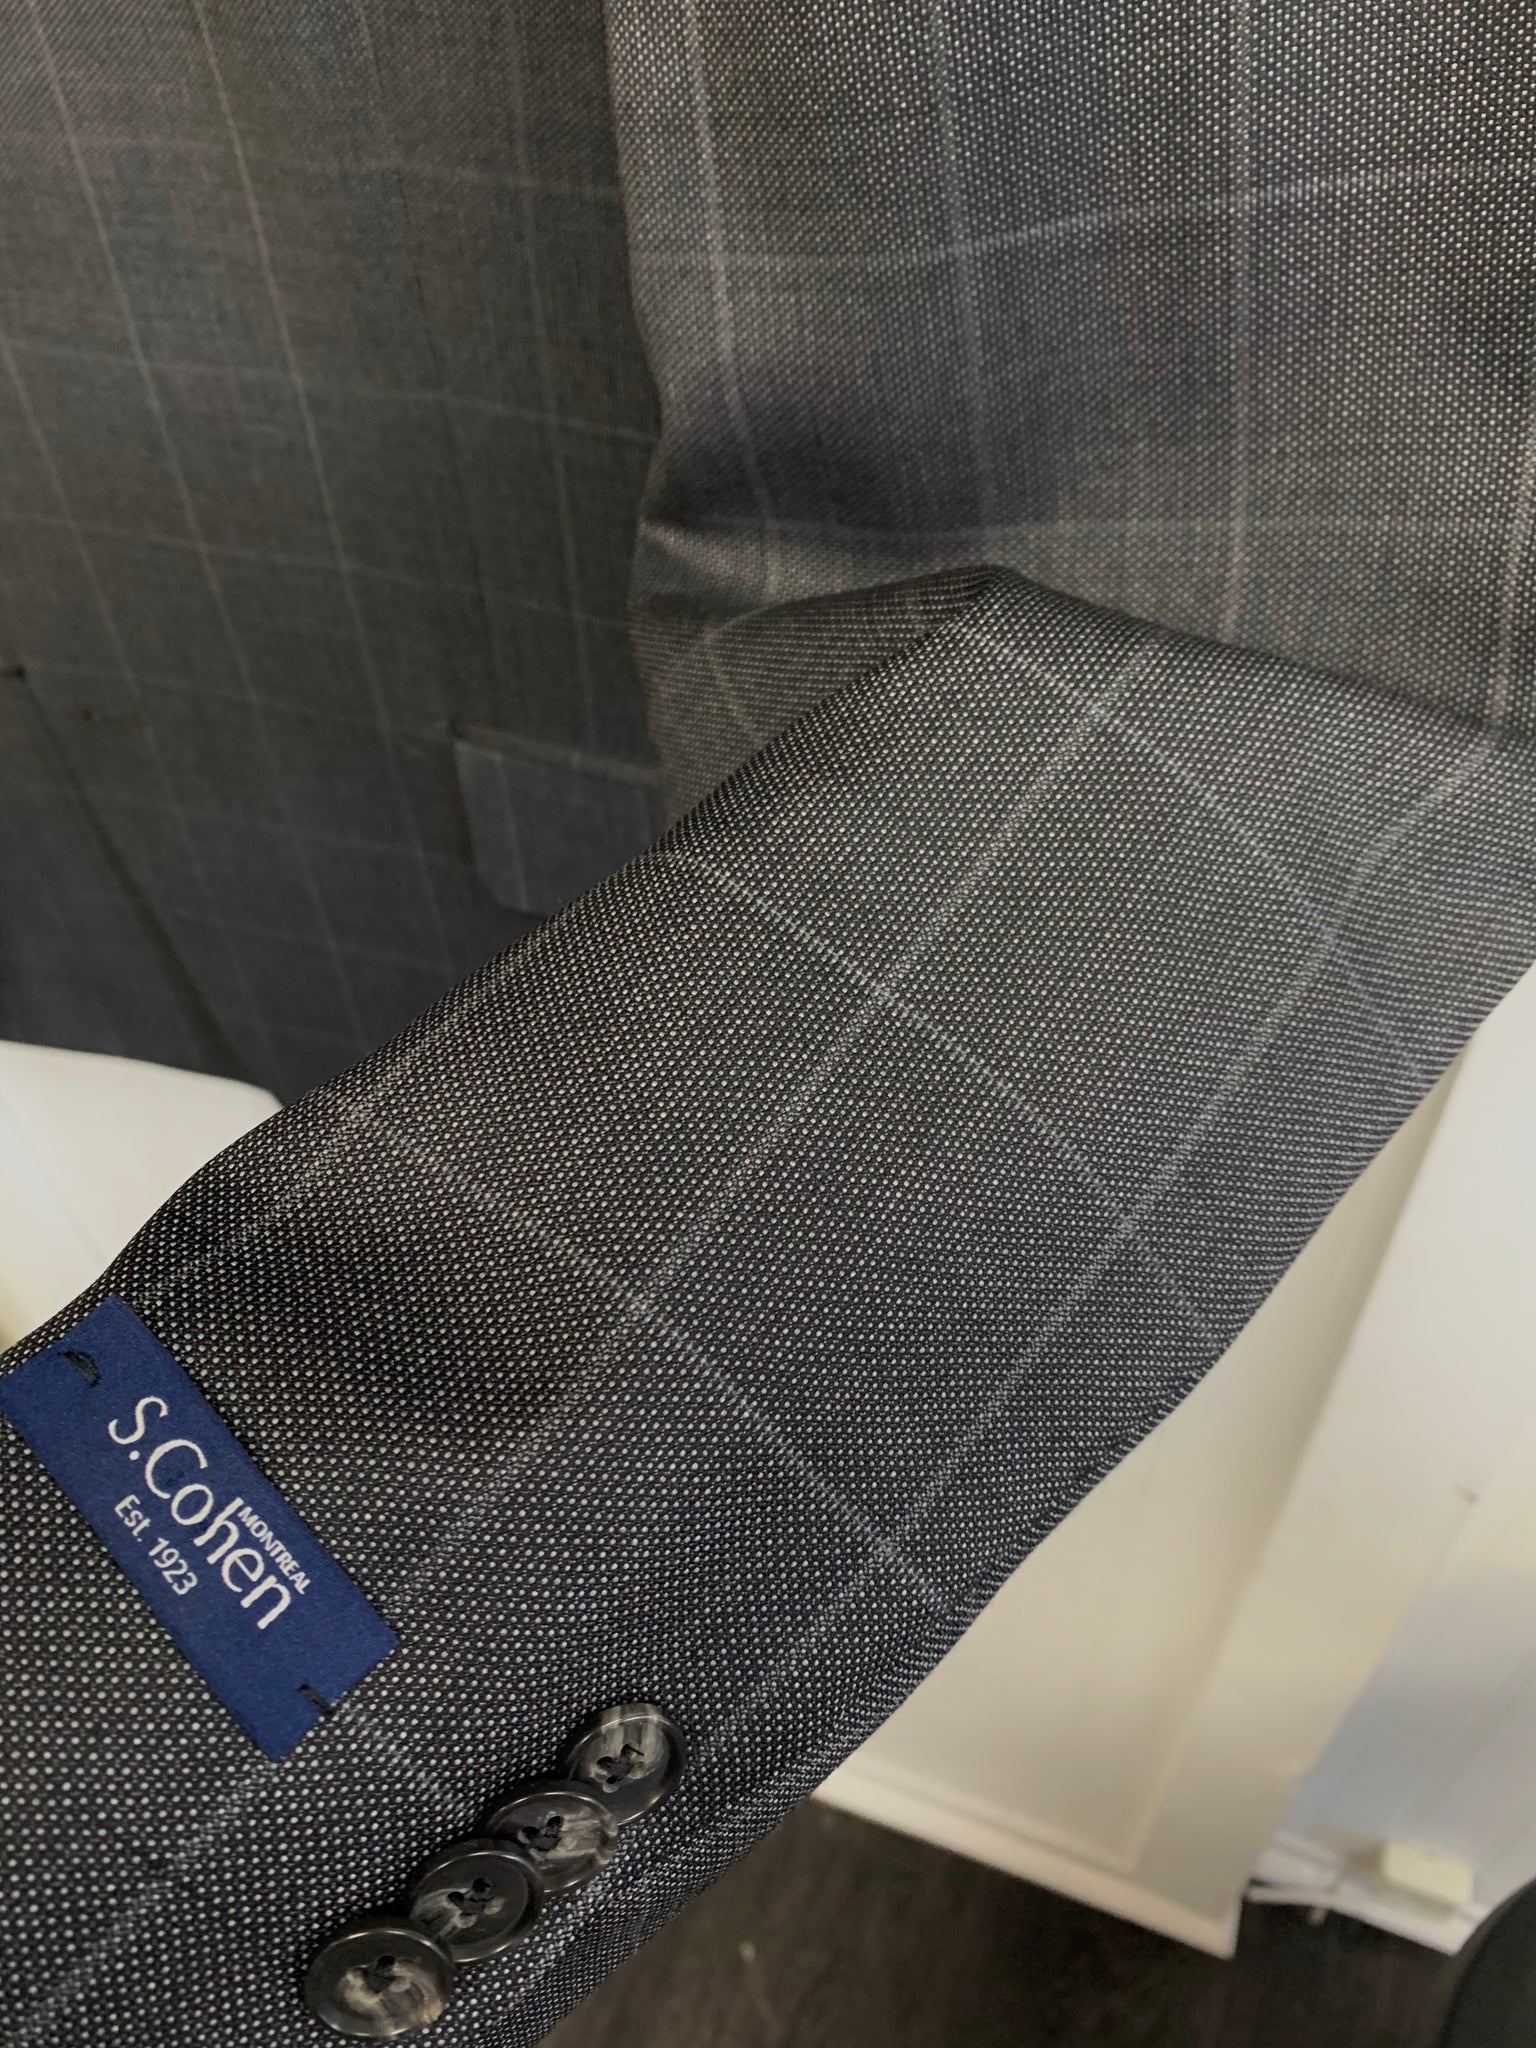 S. Cohen Super 130 Wool Suit- 97-3646 (Charcoal Gray Windowpane)